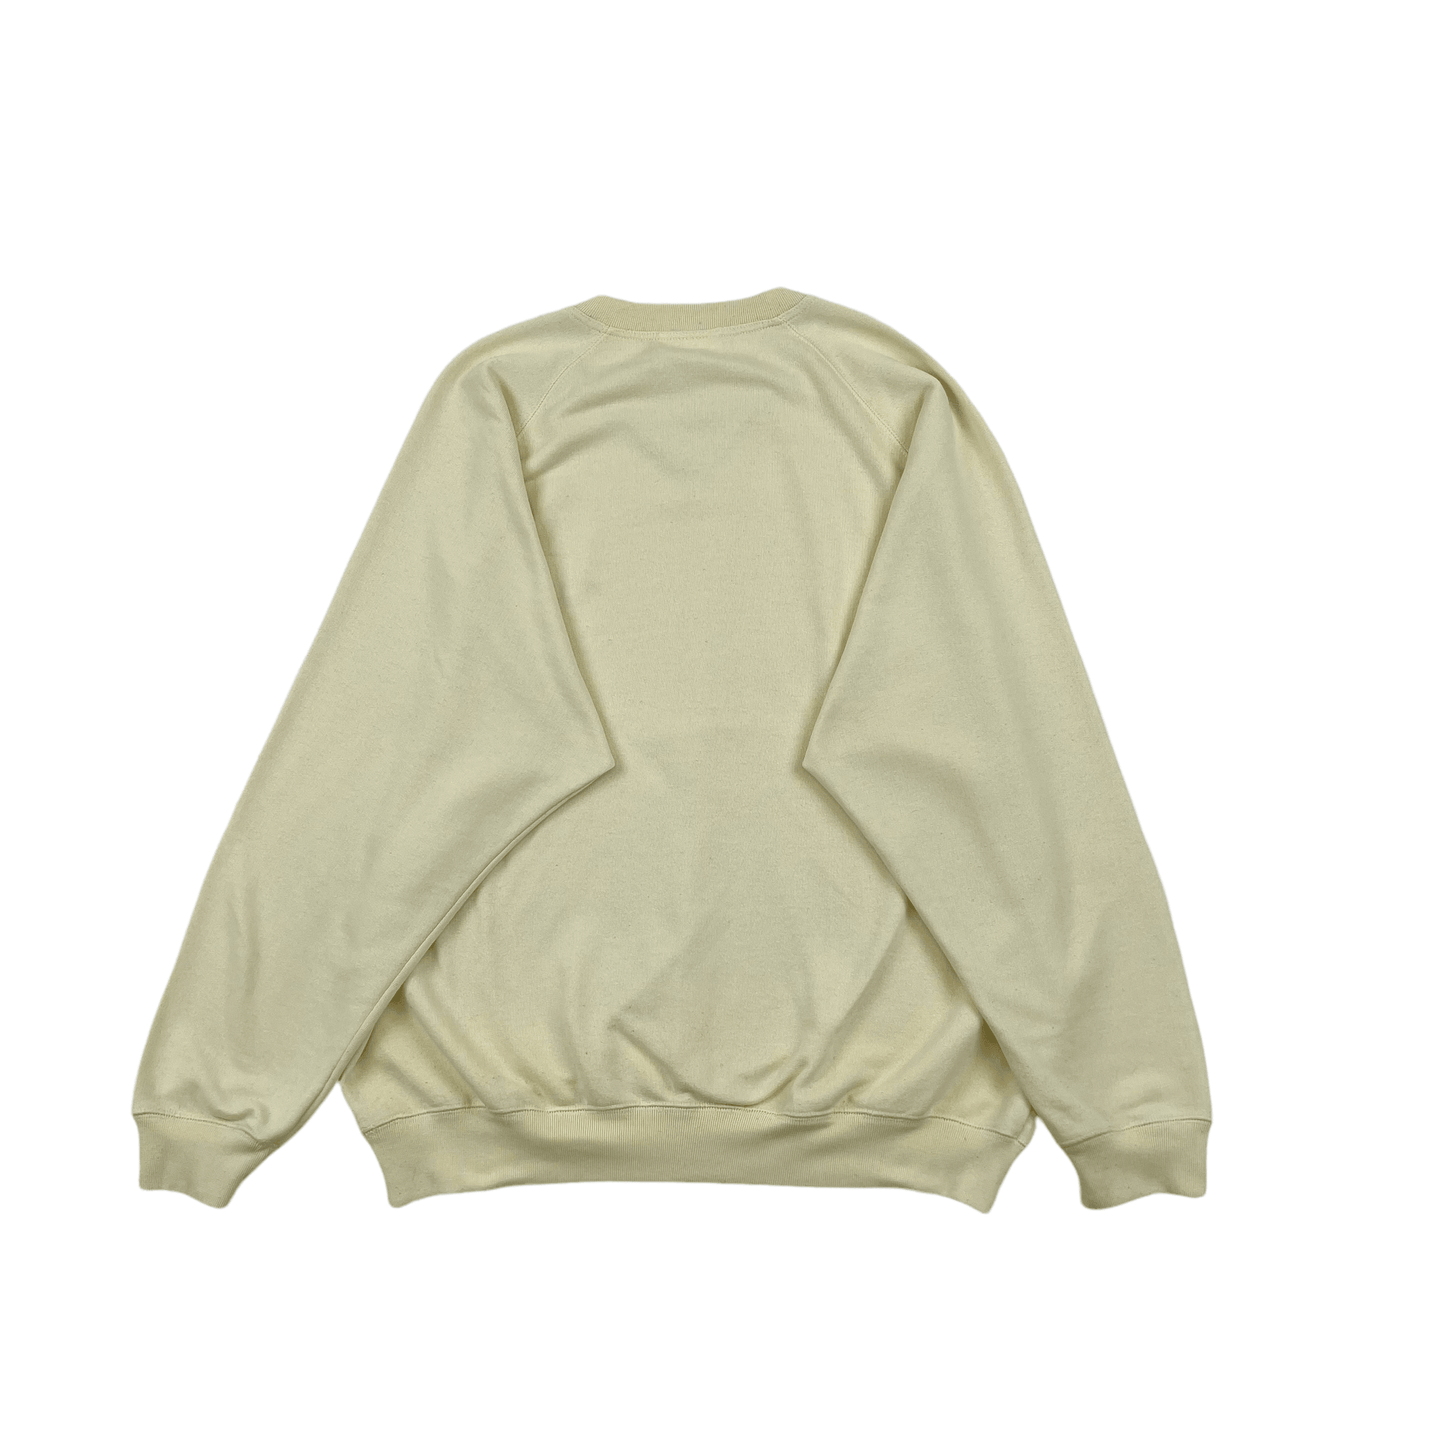 Vintage Adidas Sweatshirt - Known Source